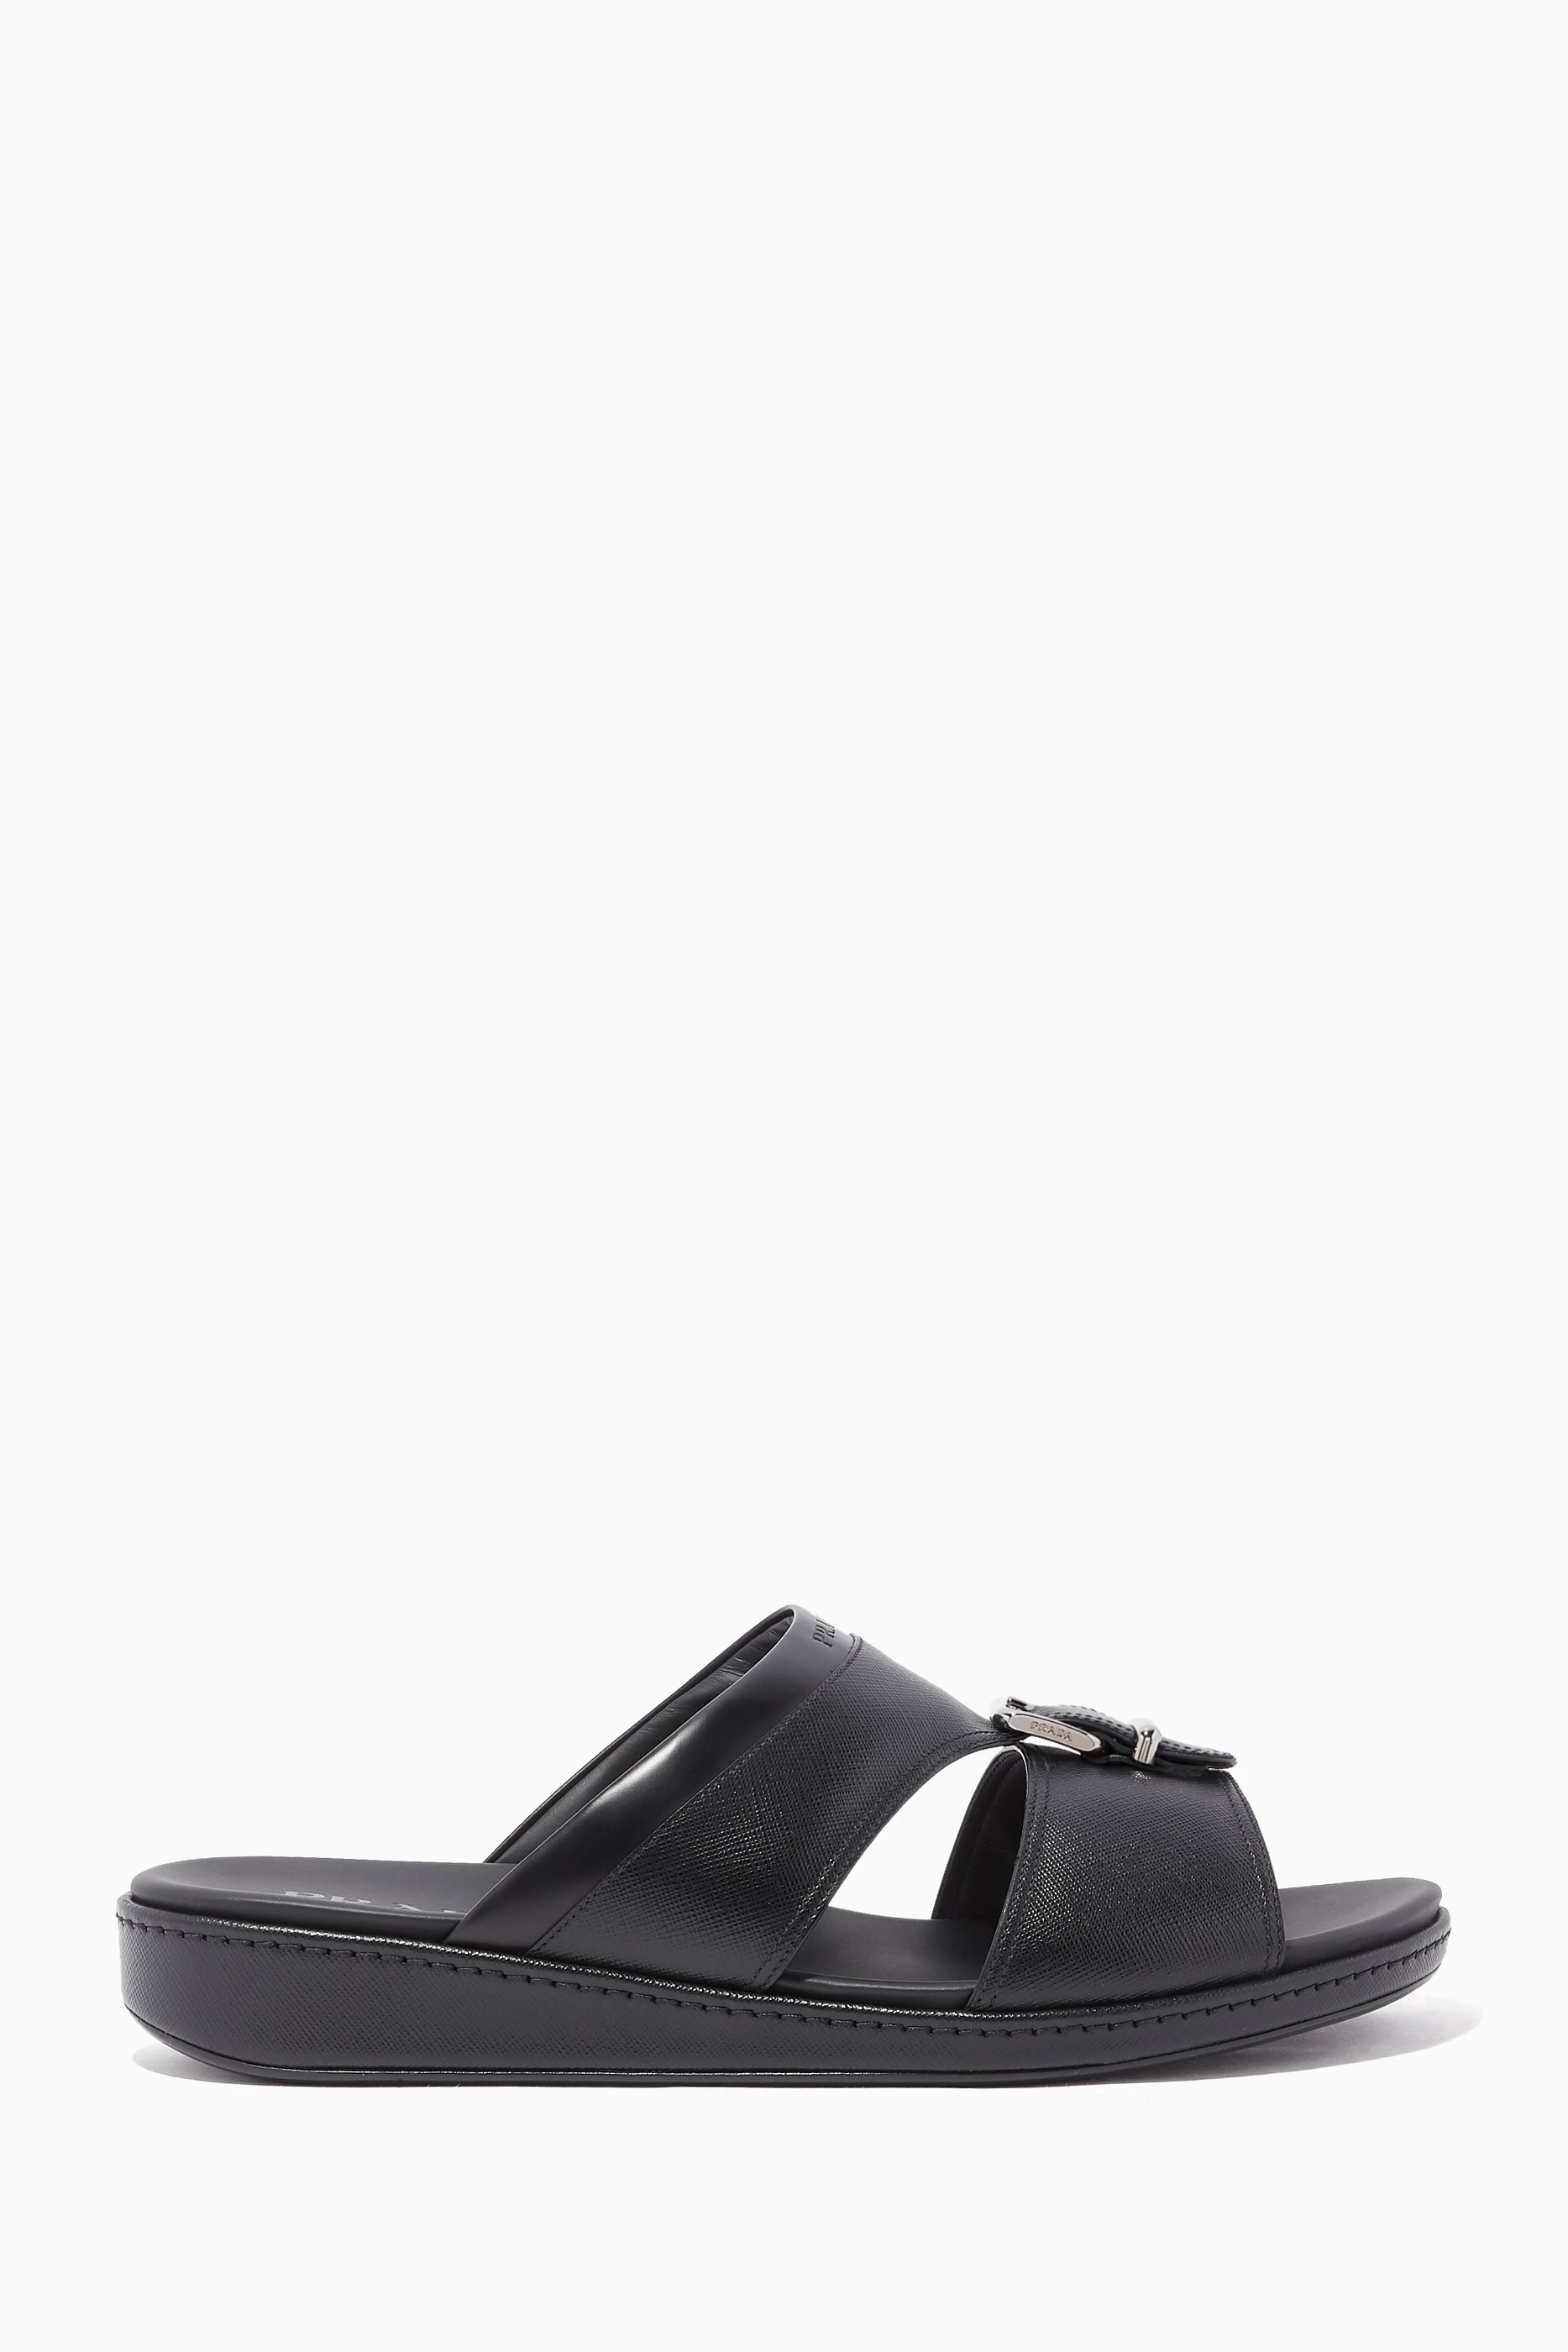 Shop Prada Black Saffiano Leather Sandals for MEN | Ounass Qatar